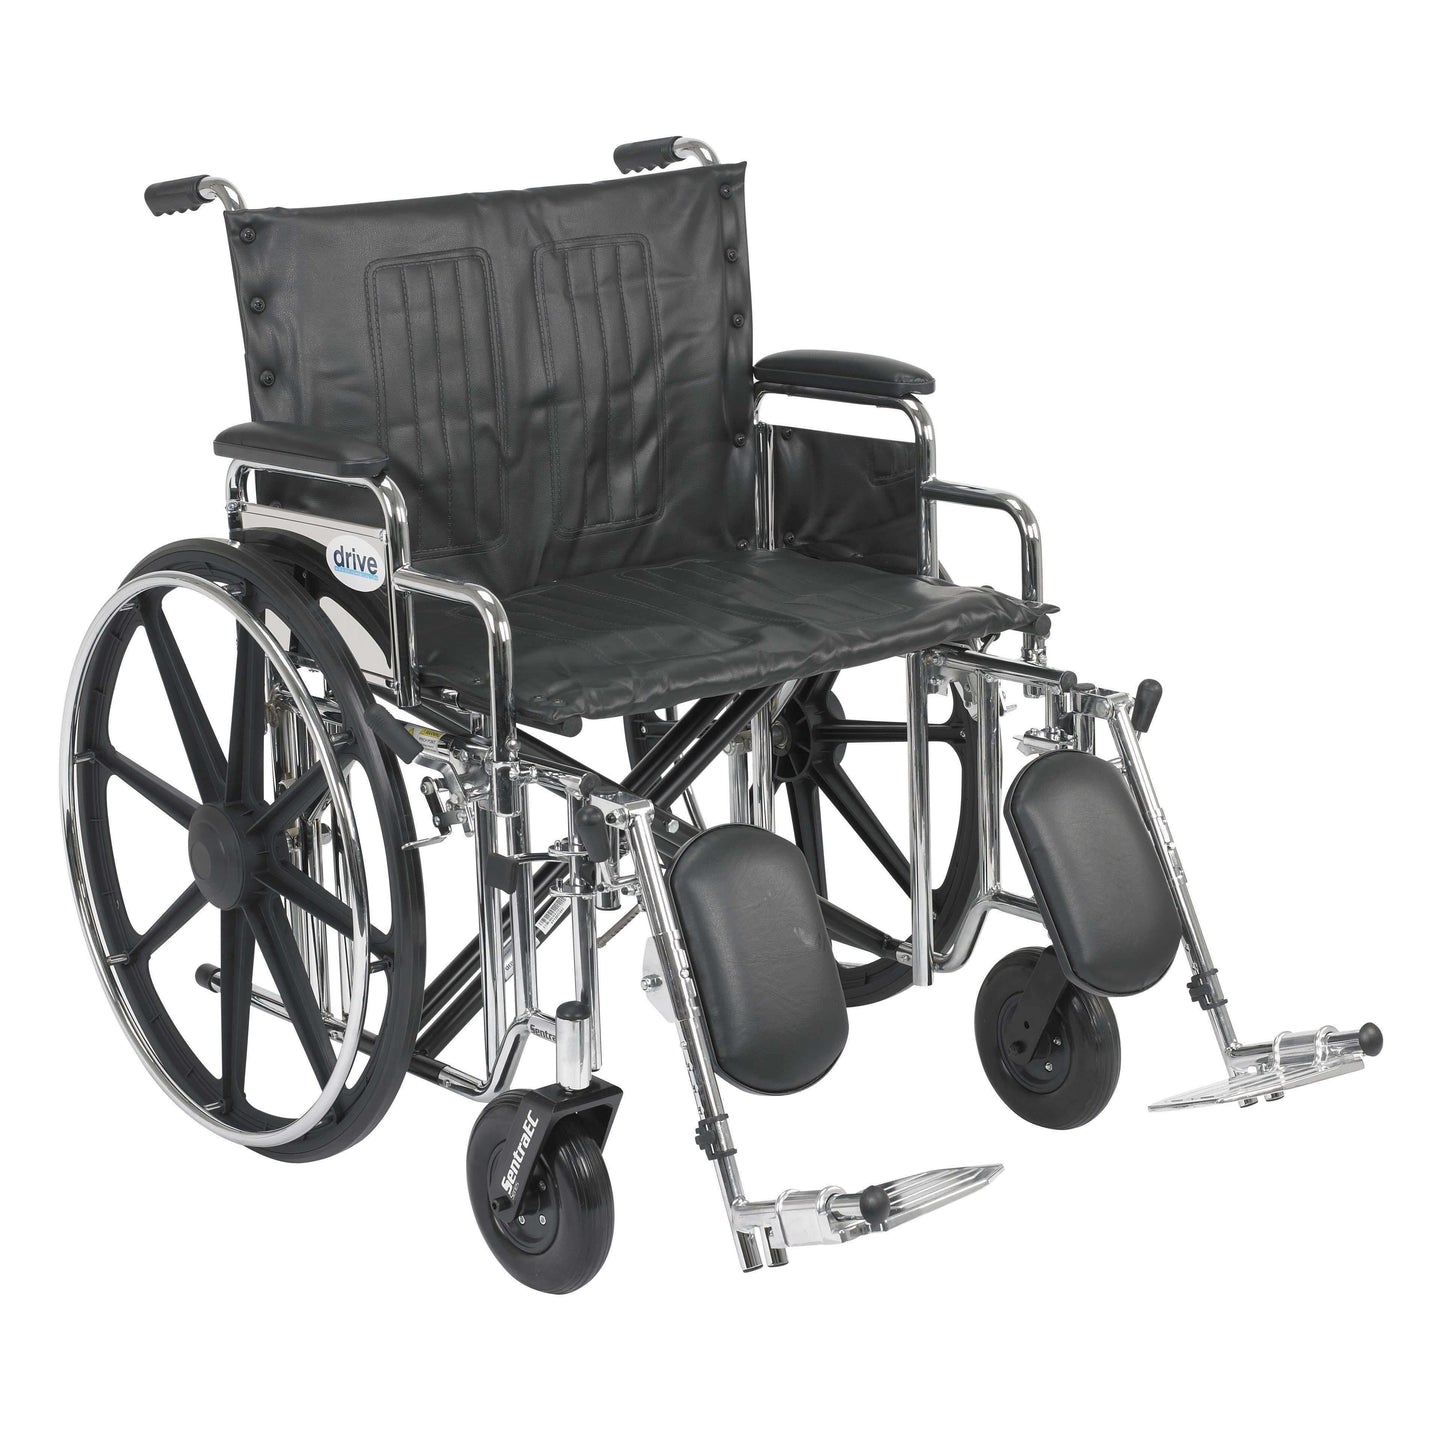 Drive std24dda-elr Sentra Extra Heavy Duty Wheelchair, Detachable Desk Arms, Elevating Leg Rests, 24"Seat